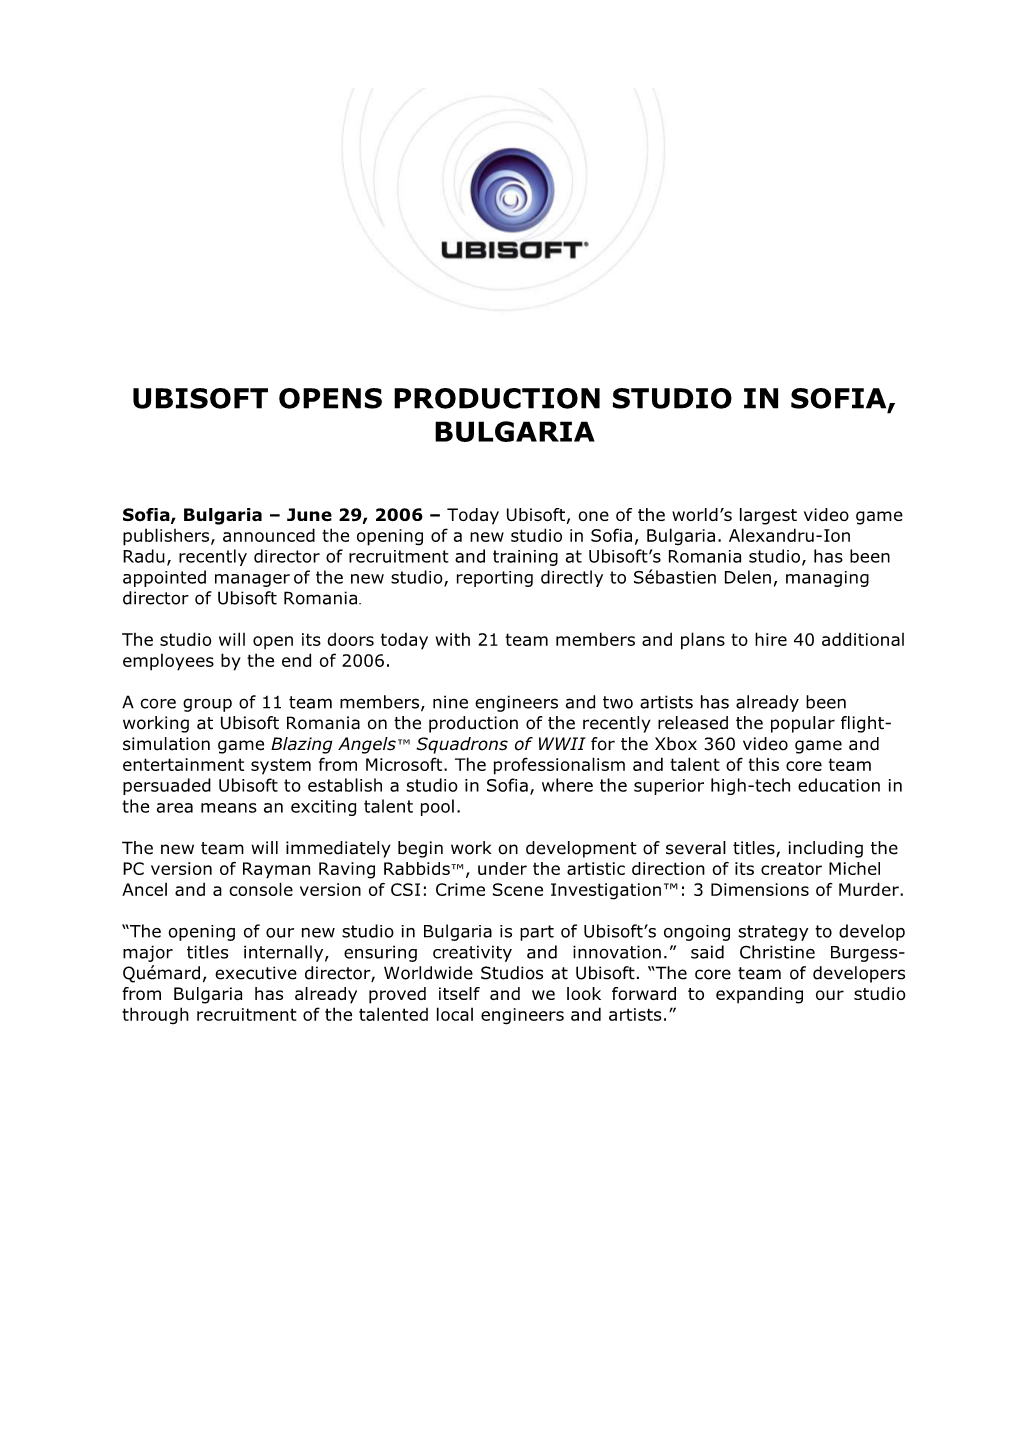 Ubisoft Opens Production Studio in Sofia, Bulgaria